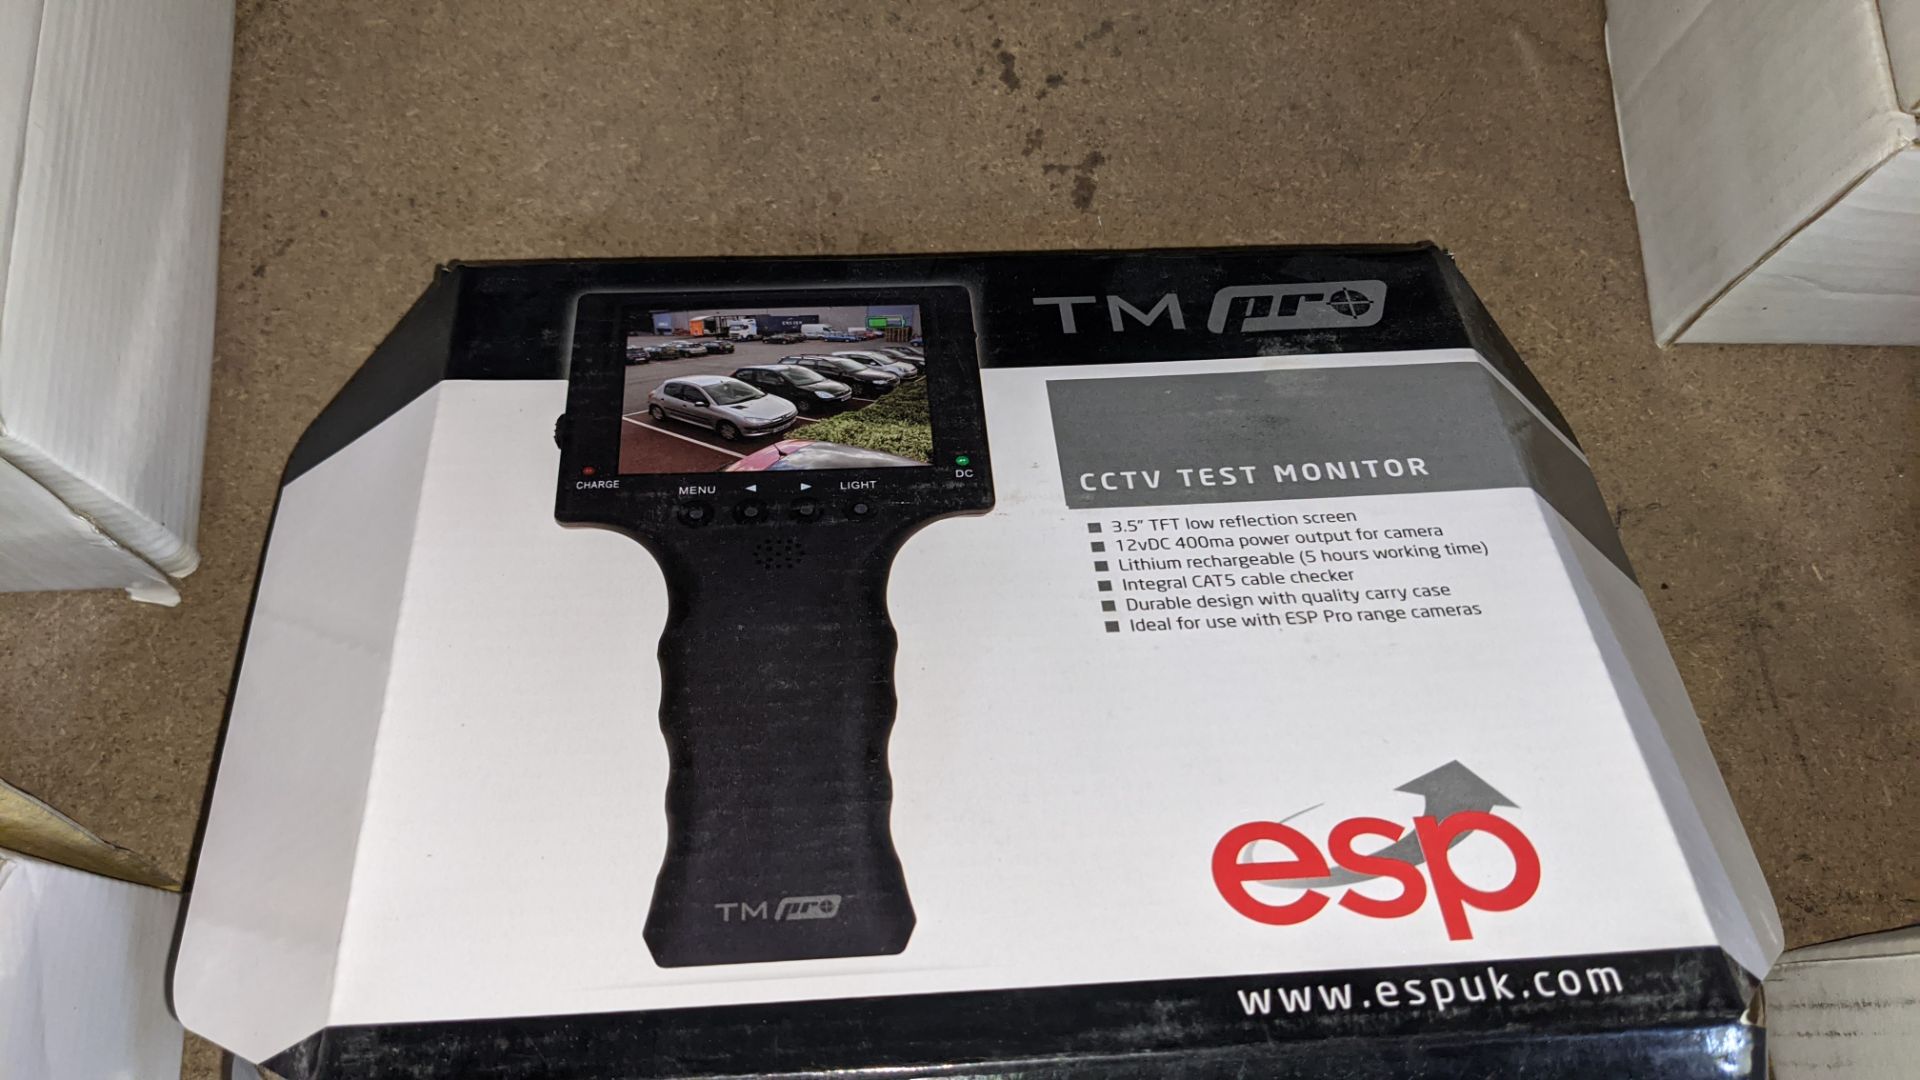 ESP CCTV test monitor - Image 3 of 3